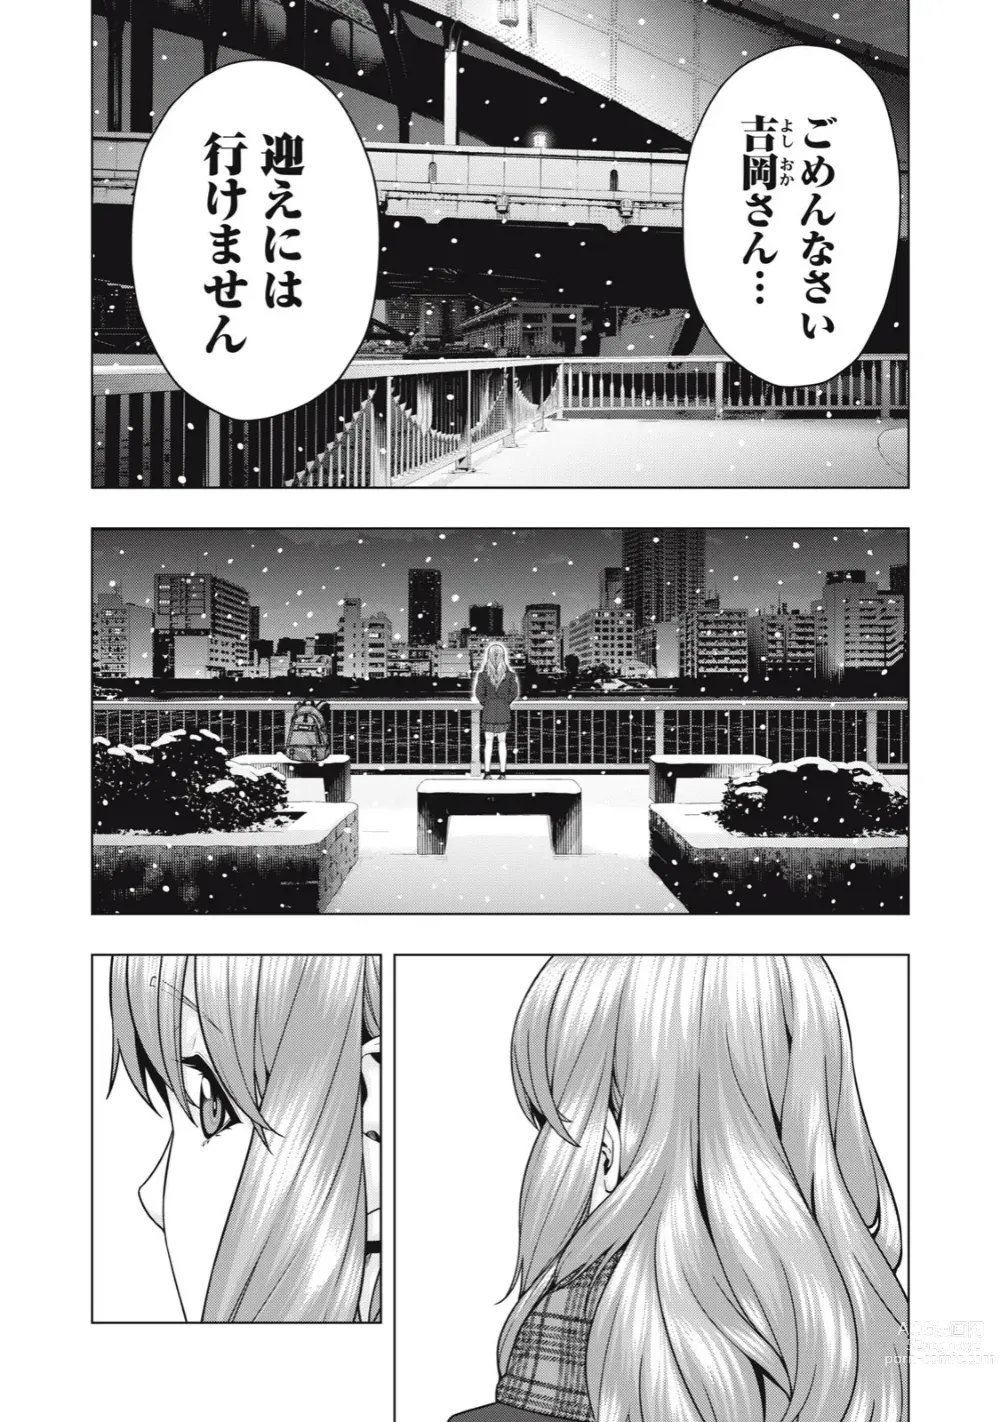 Page 591 of manga Kanojo no Tomodachi